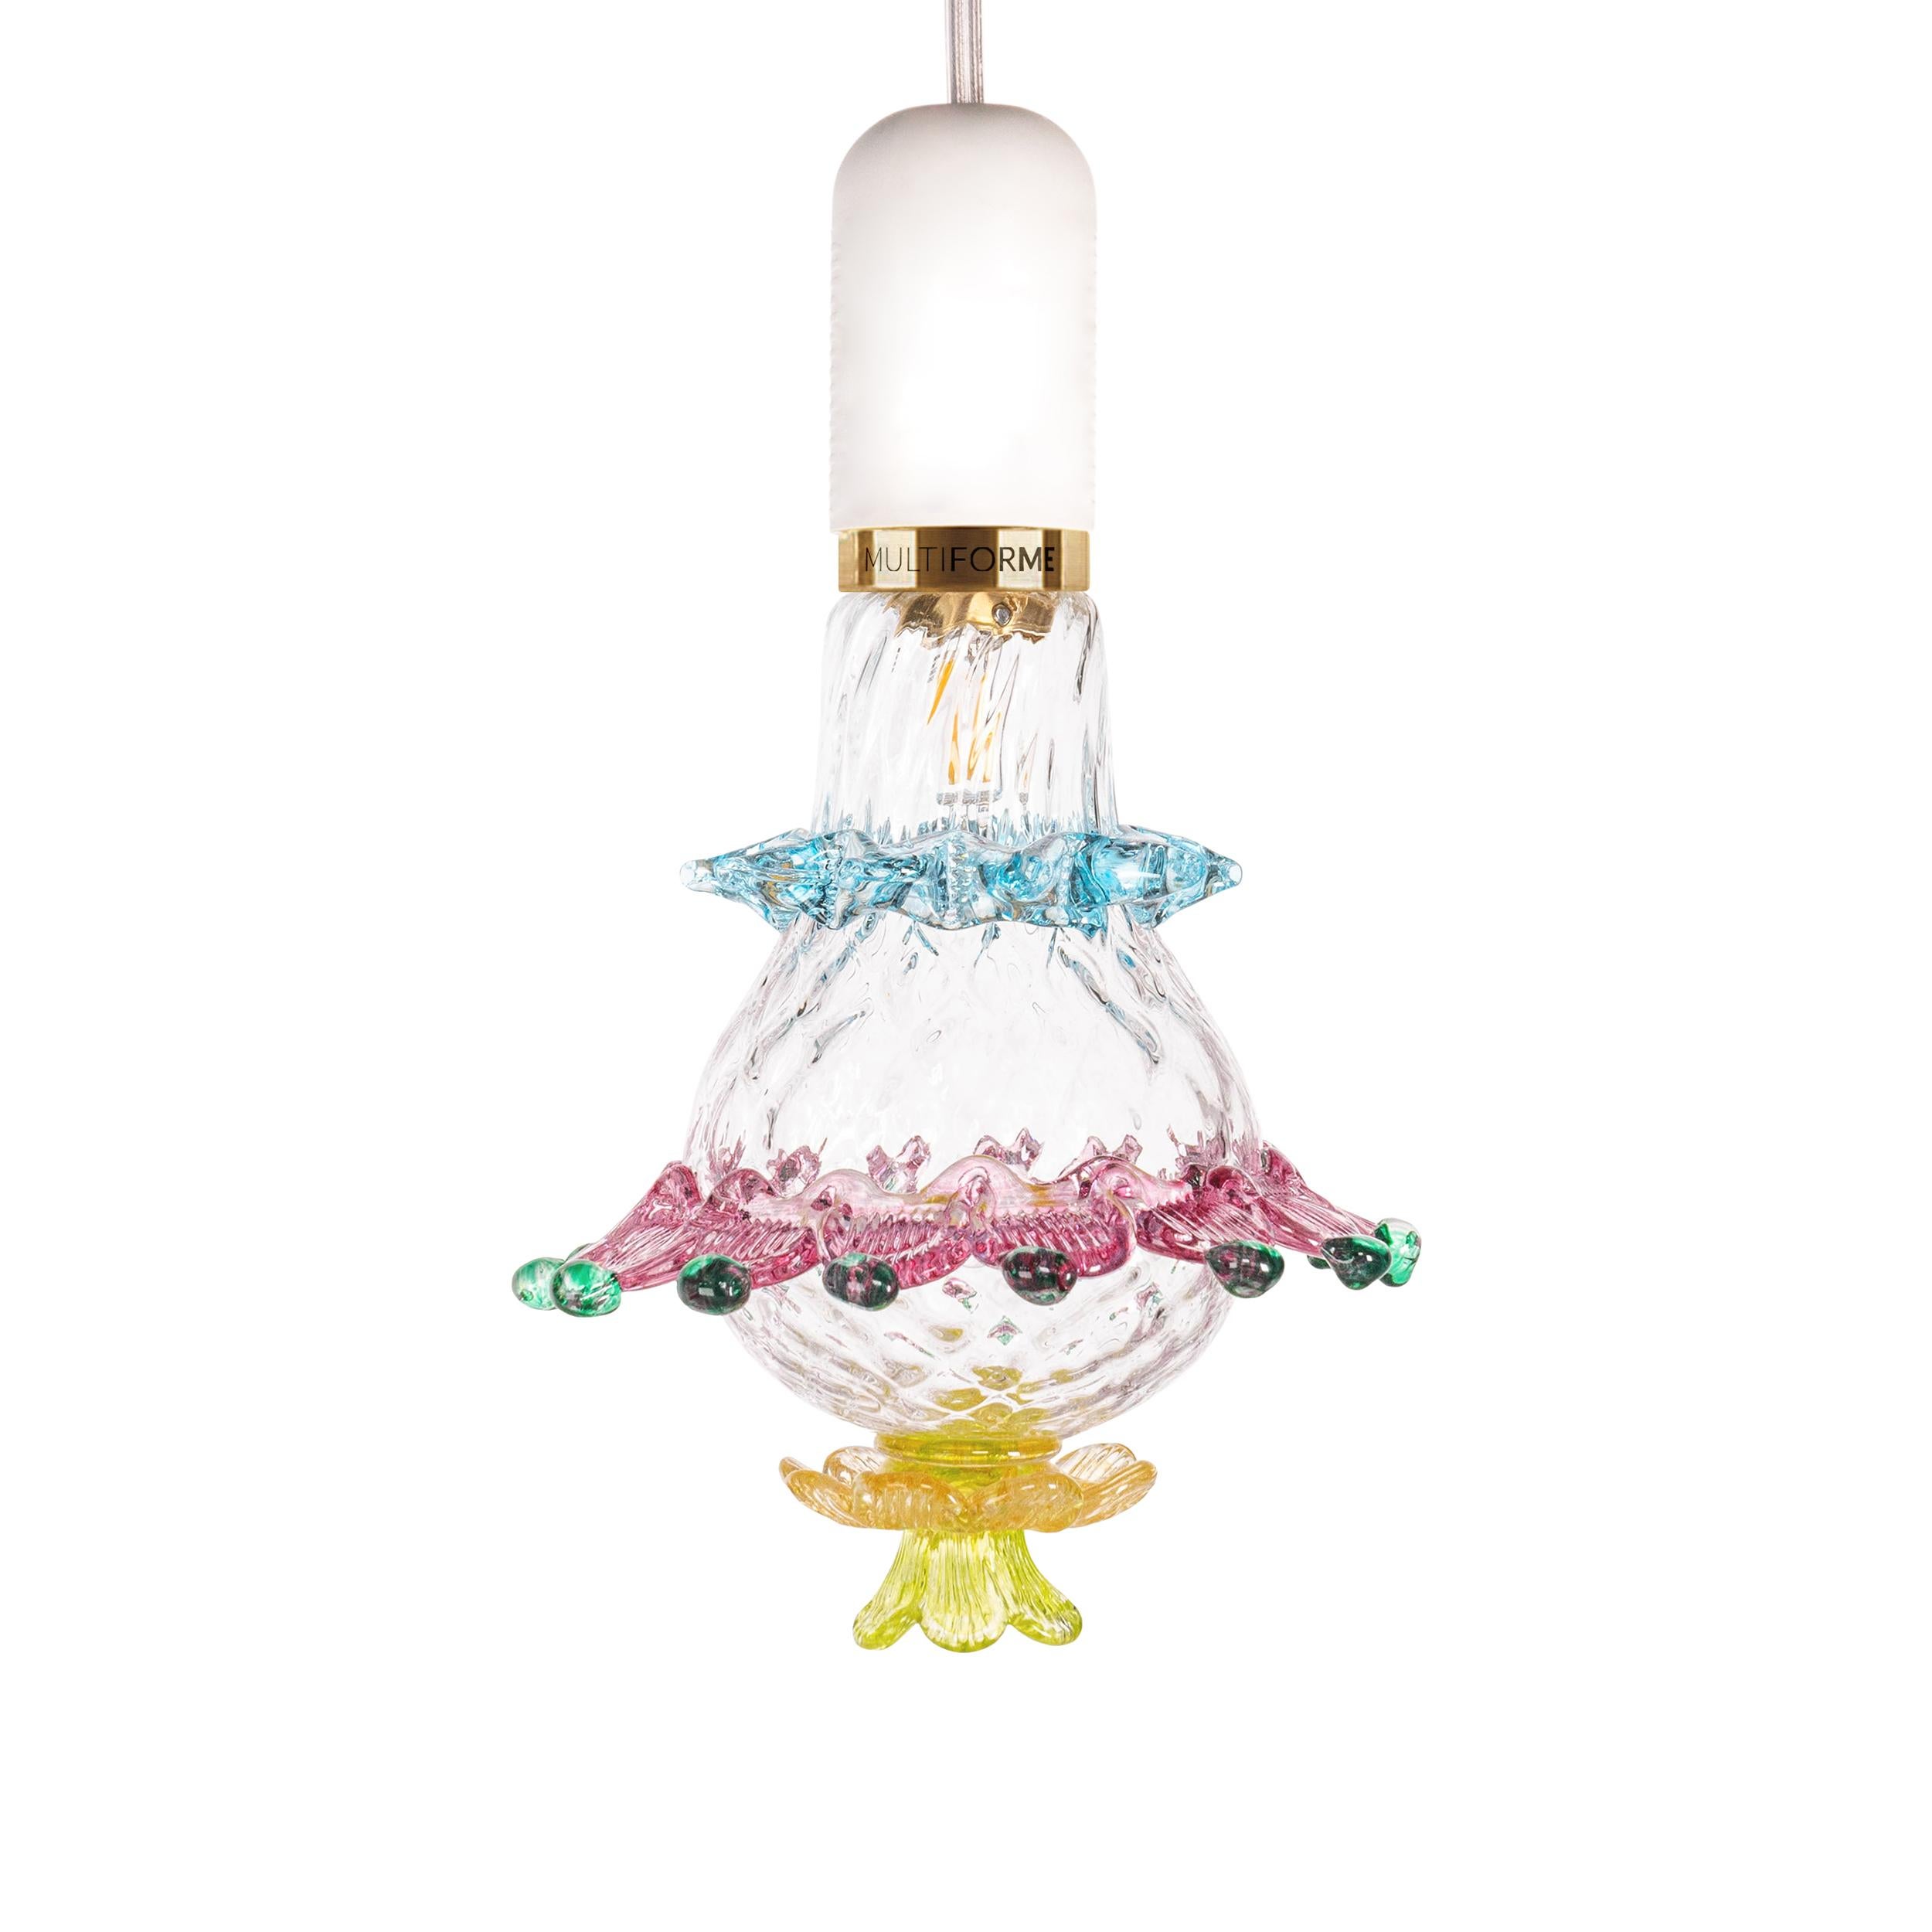 Italian Artistic glass lightbulb chandelier Murano Bulb Marcantonio X Multiforme #01 For Sale